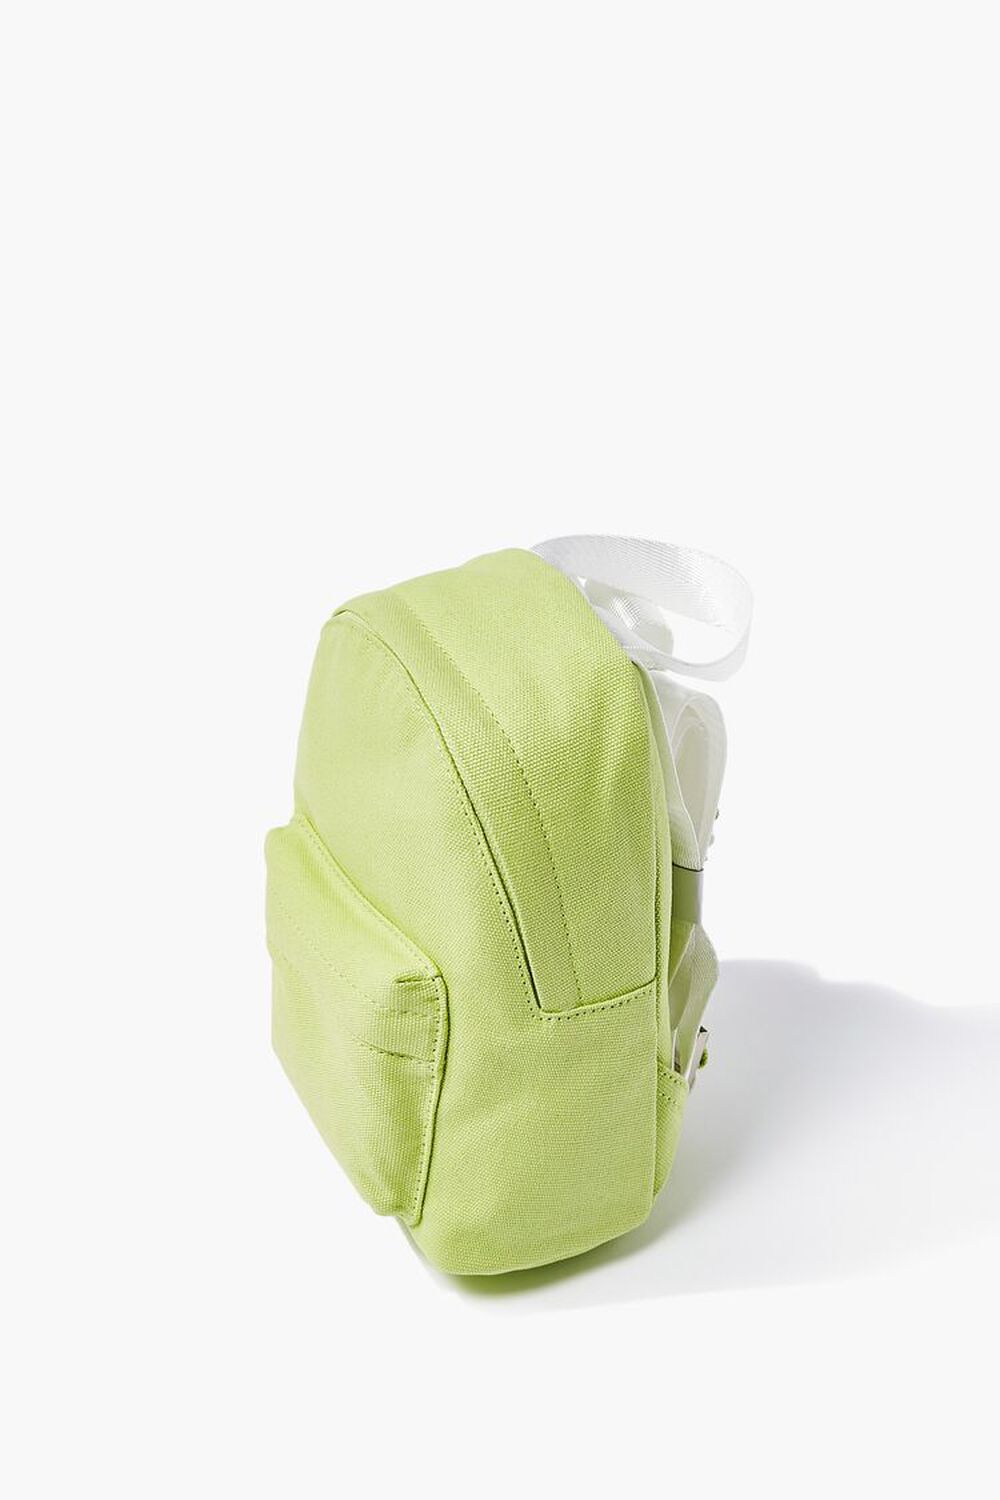 LIME Zippered Brushed Backpack, image 2